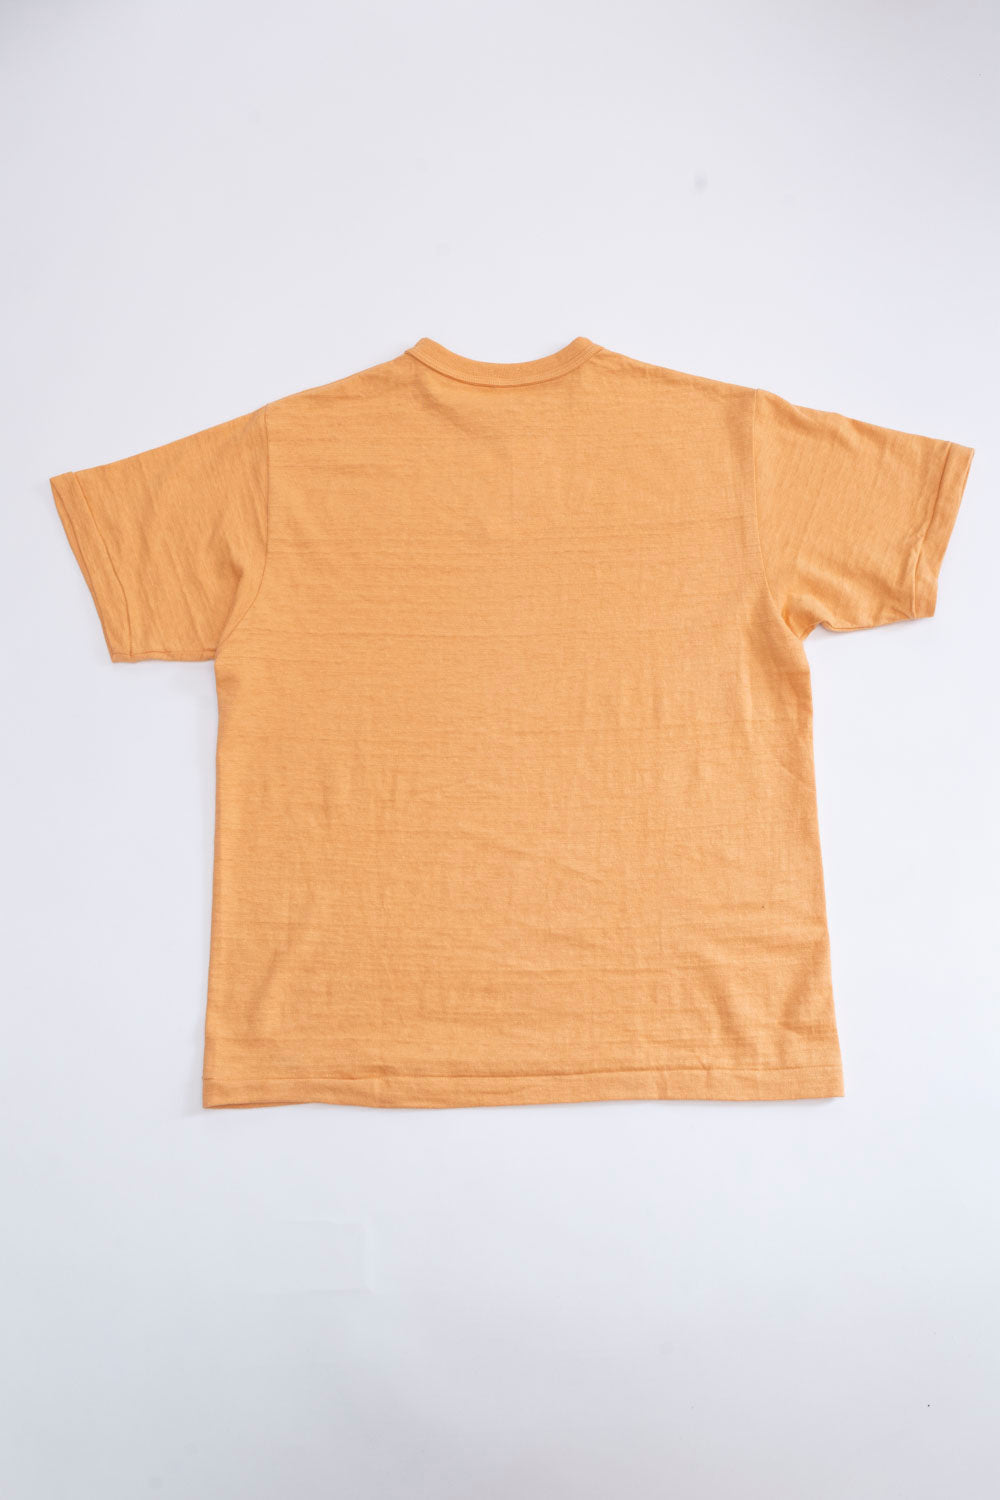 Lot 4601 - Slubby Cotton T-Shirt - Orange